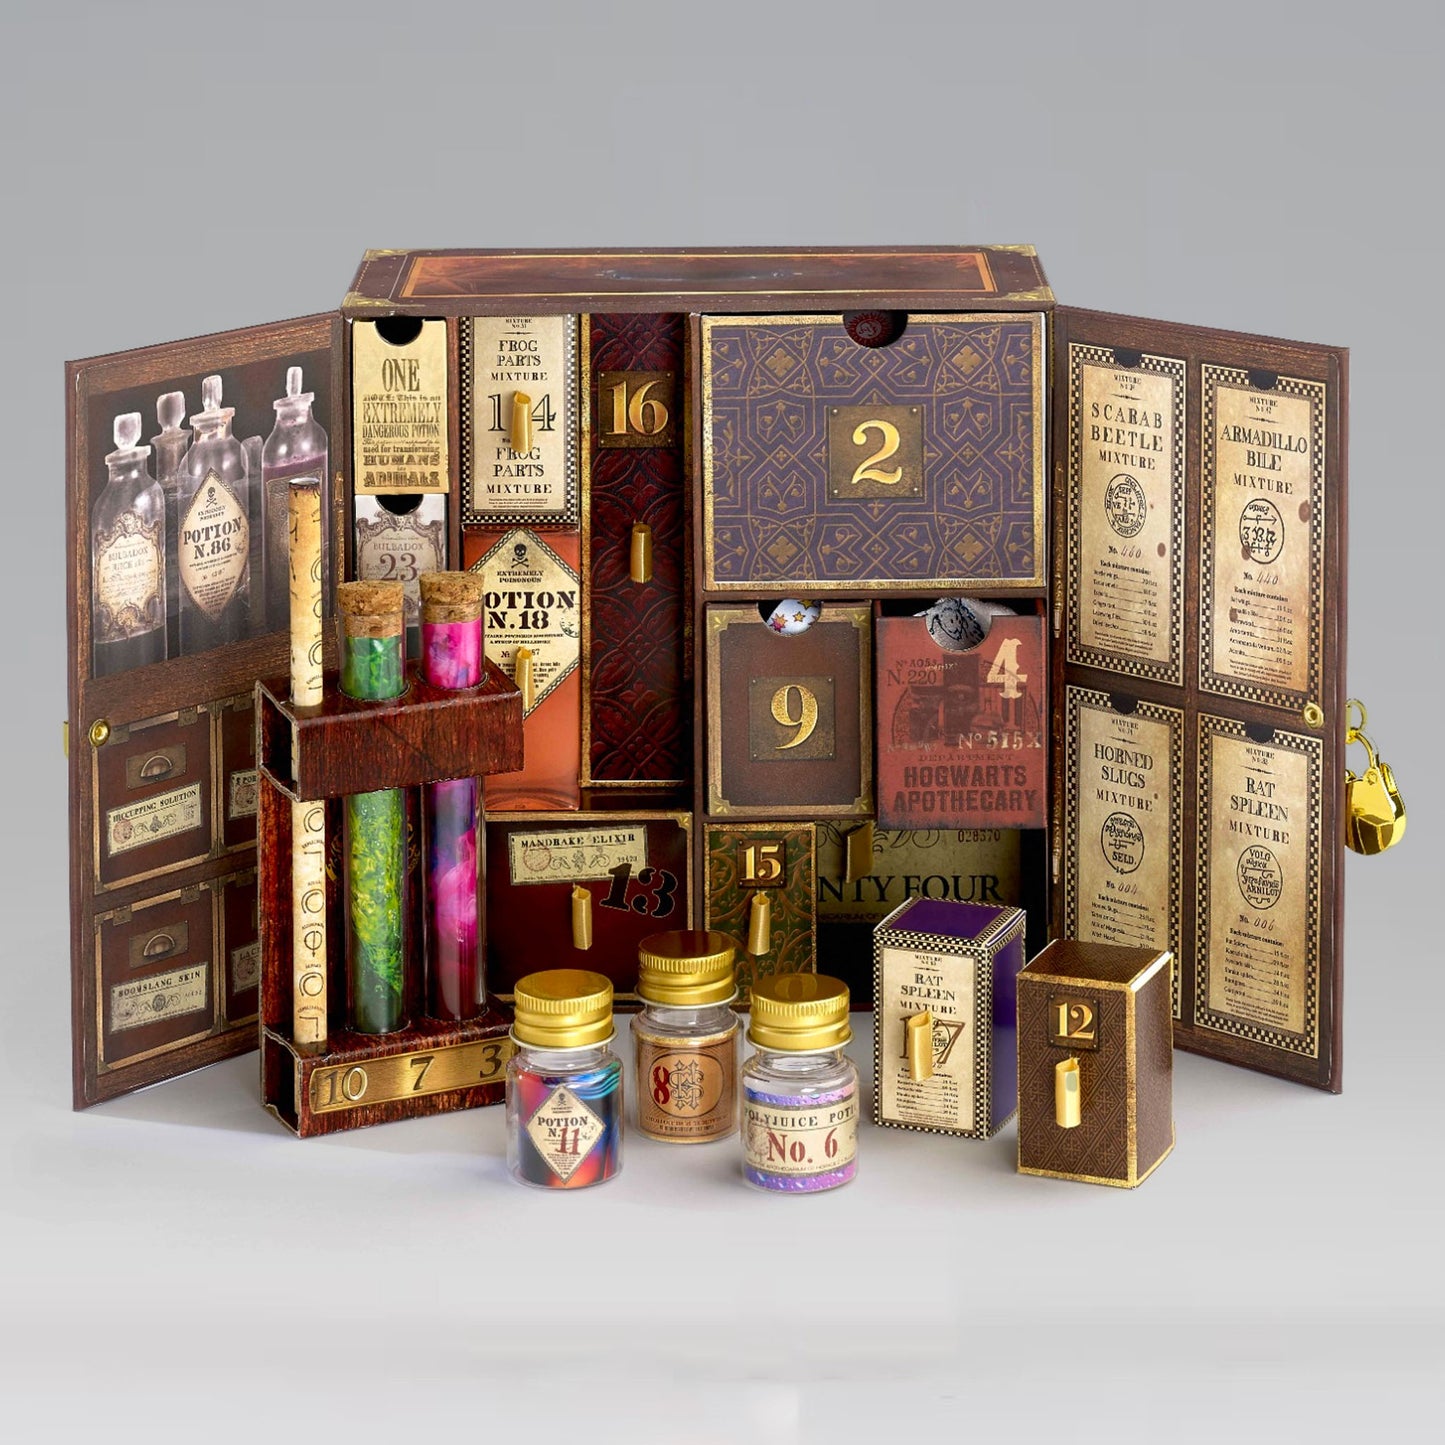 Harry Potter Potions Edition Keepsake & Jewelry Advent Calendar Gift Set